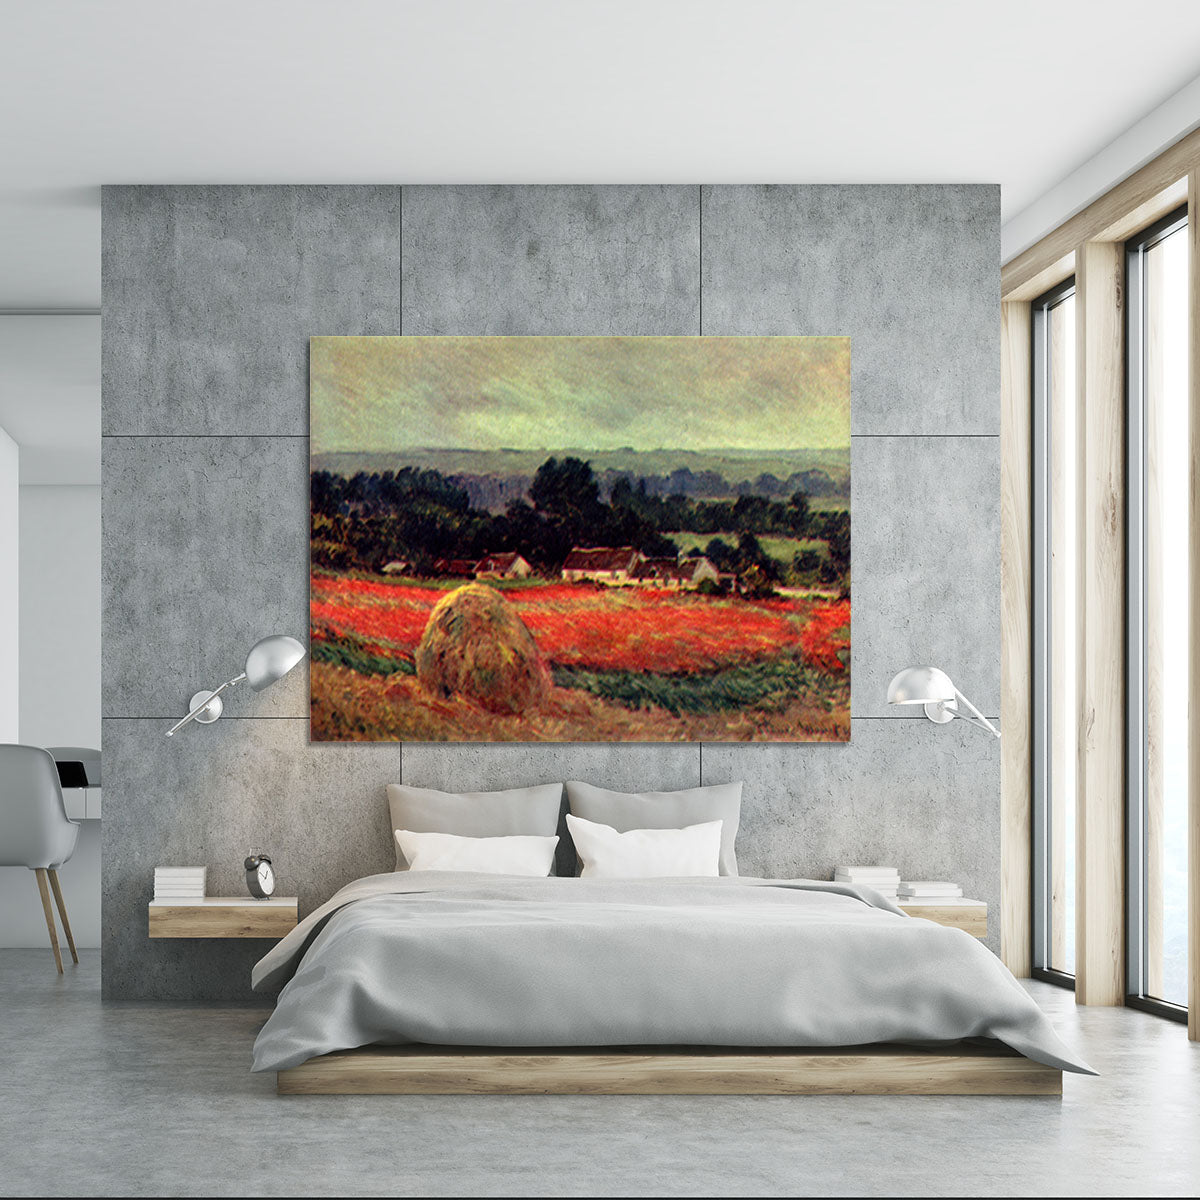 The poppy Blumenfeld The barn by Monet Canvas Print or Poster - Canvas Art Rocks - 5